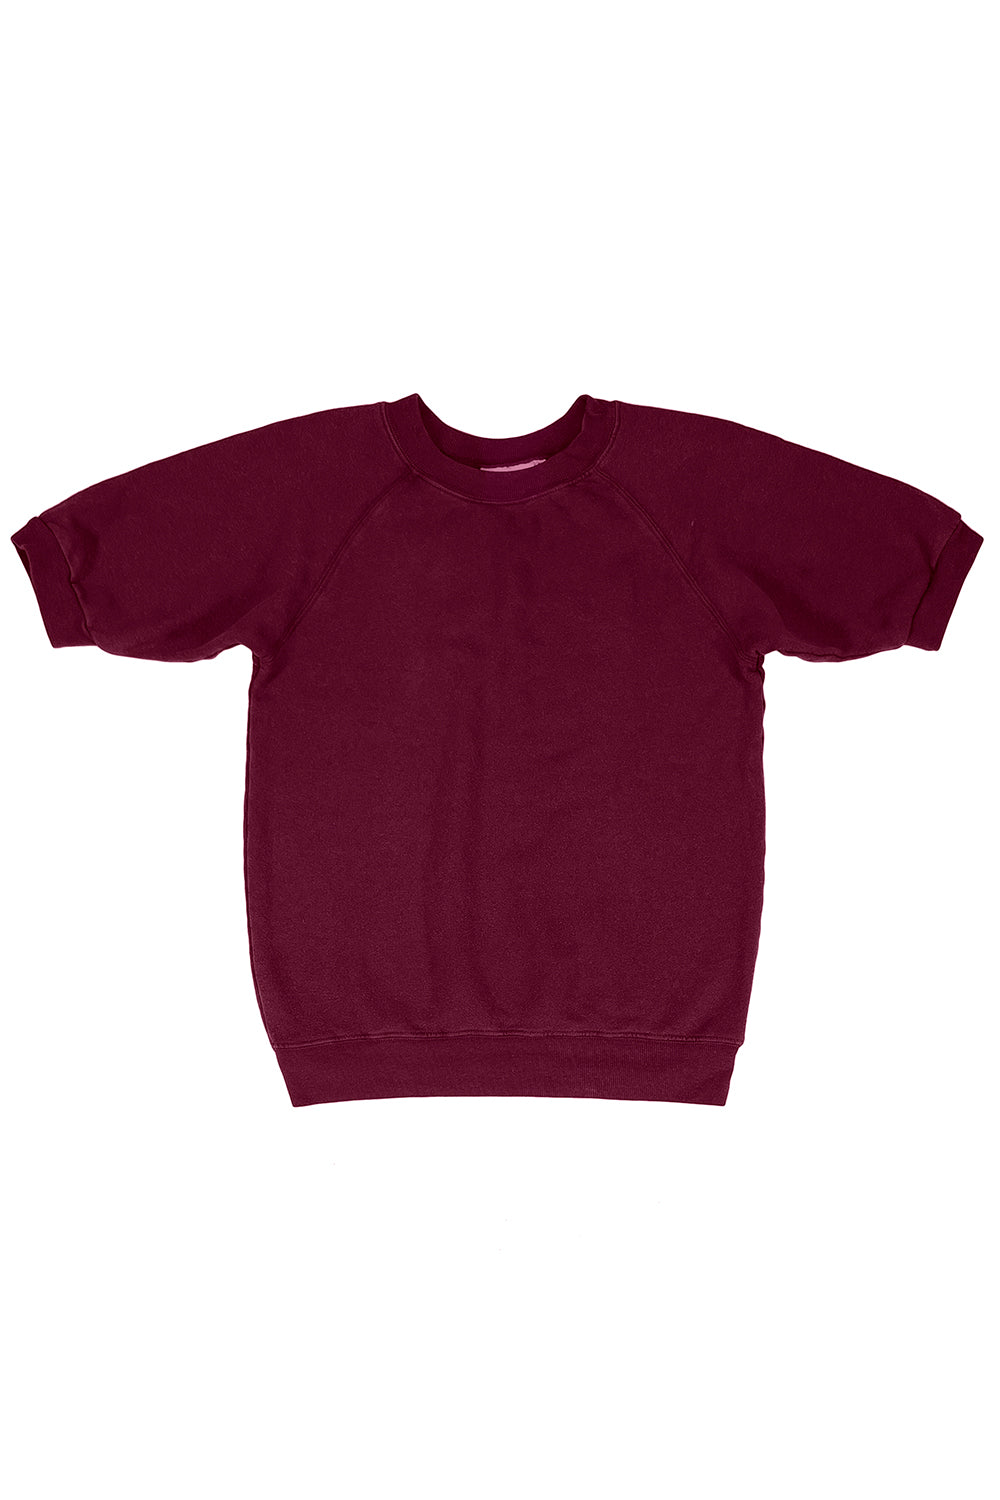 Short Sleeve Raglan Sherpa Sweatshirt | Jungmaven Hemp Clothing & Accessories / Color: Burgundy